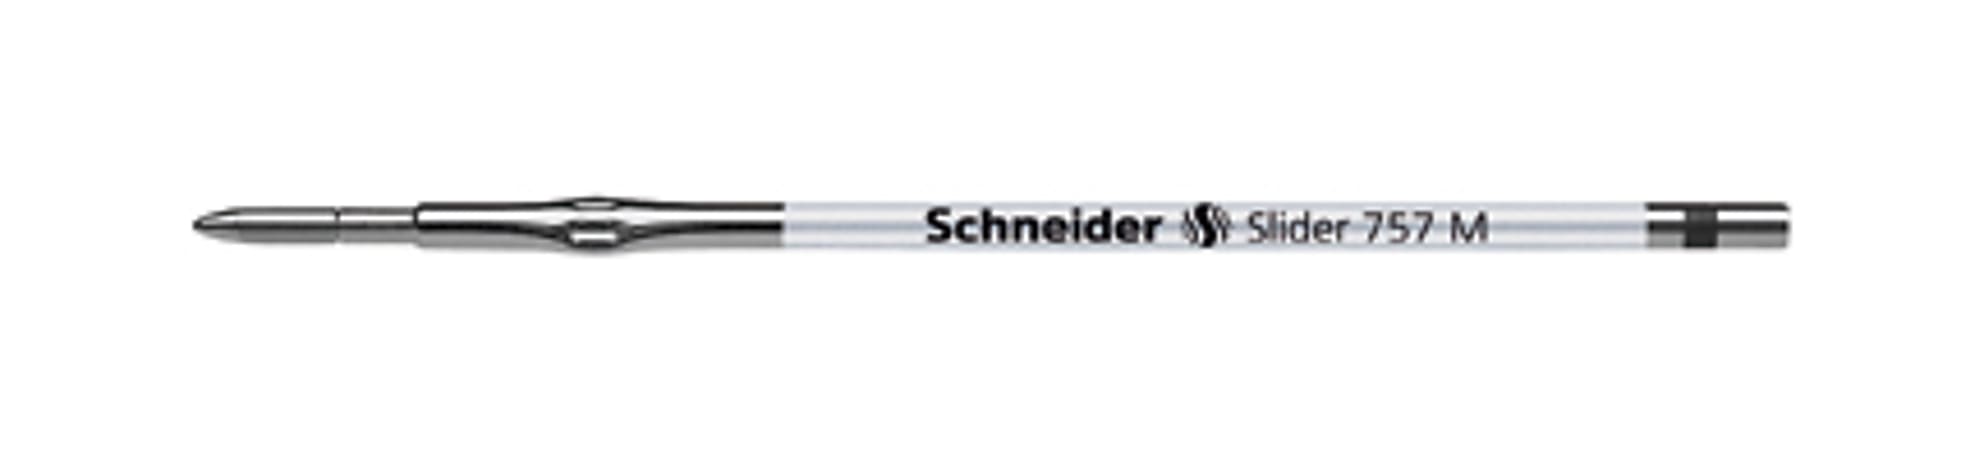 Stride® Schneider Slider 757 Refills, For Pulse Pro And Sharky Pens, Medium Point, Black Ink, Pack Of 10